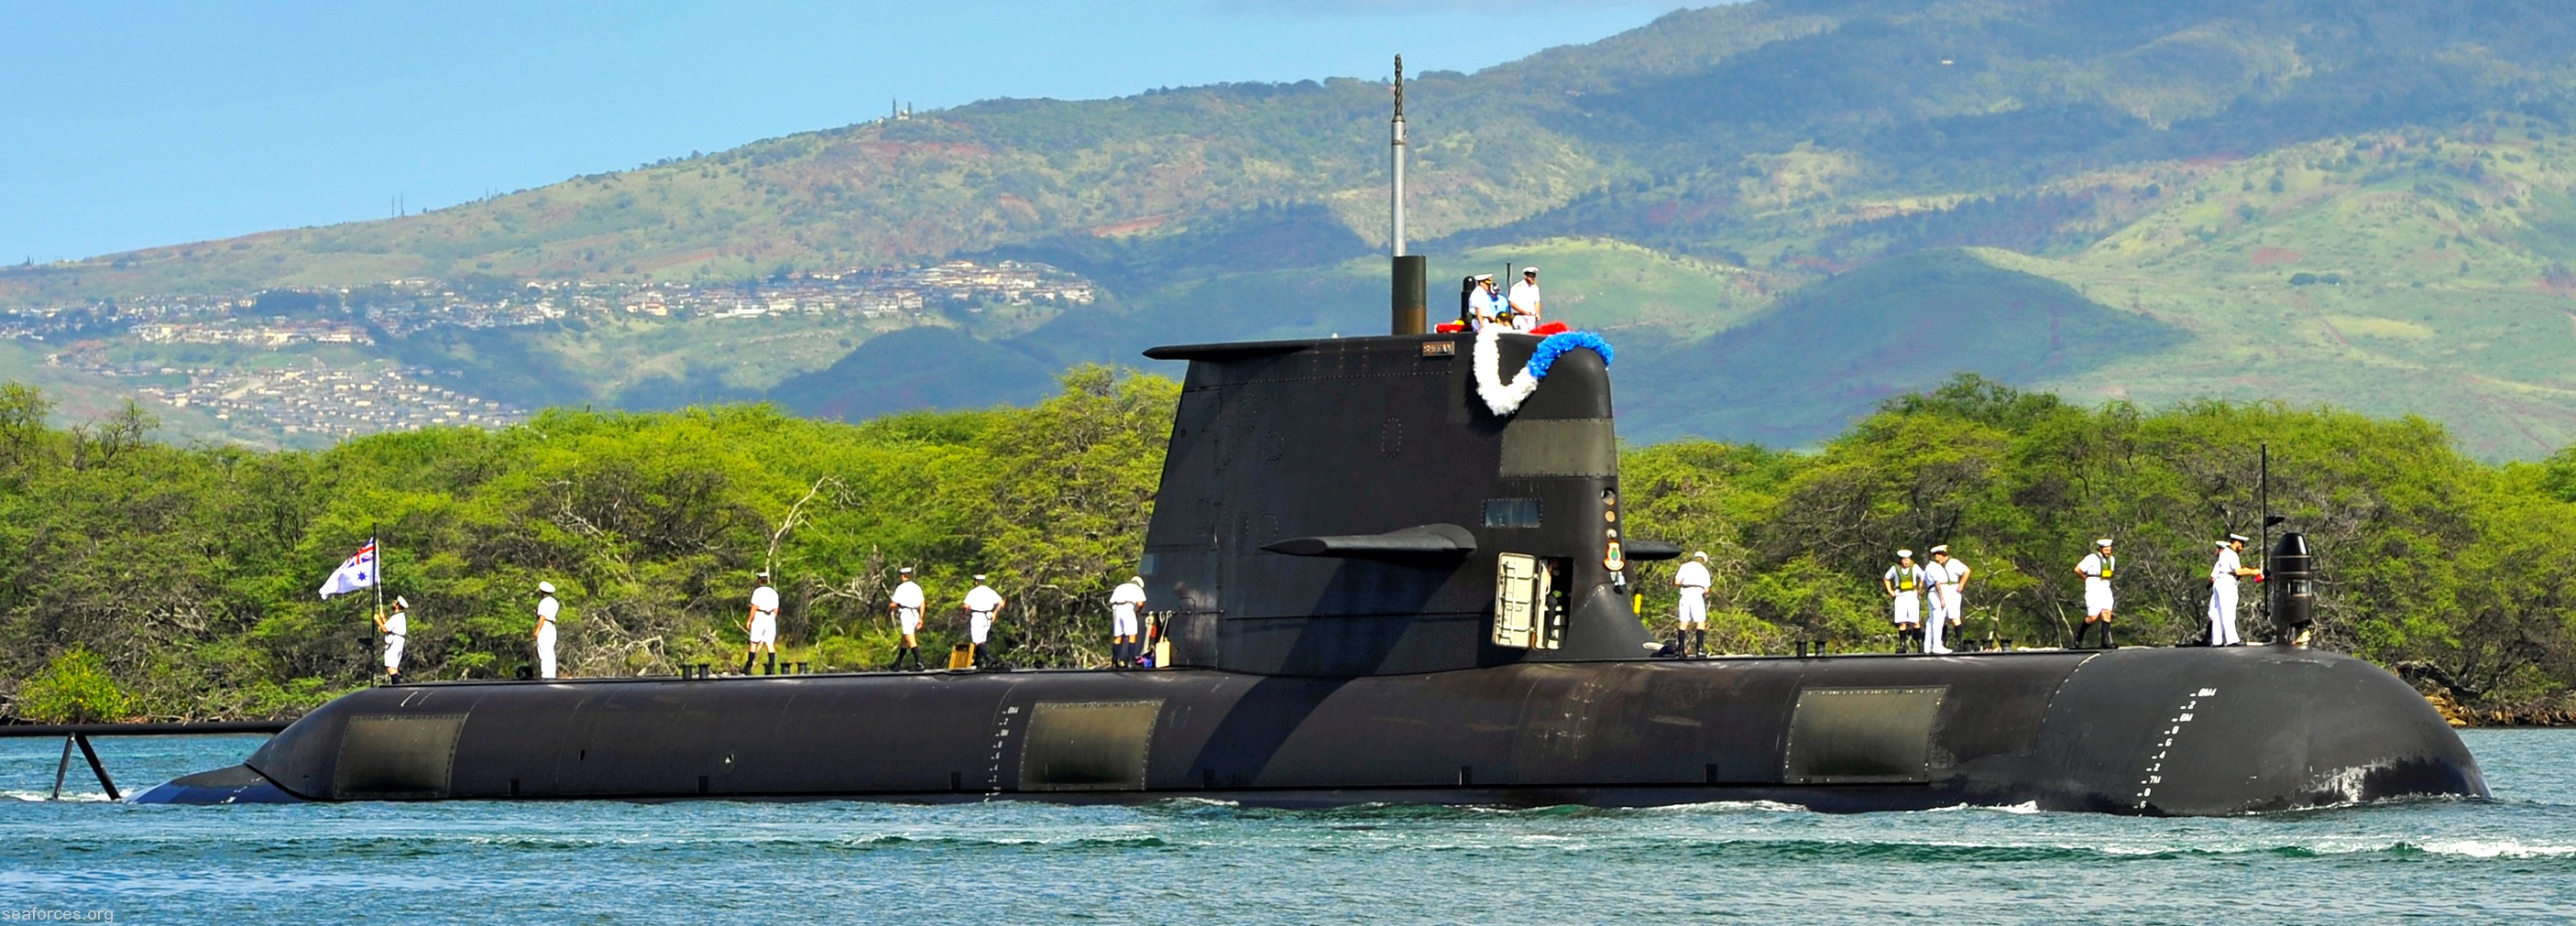 hmas sheean ssg-77 collins class attack submarine ssk royal australian navy 02